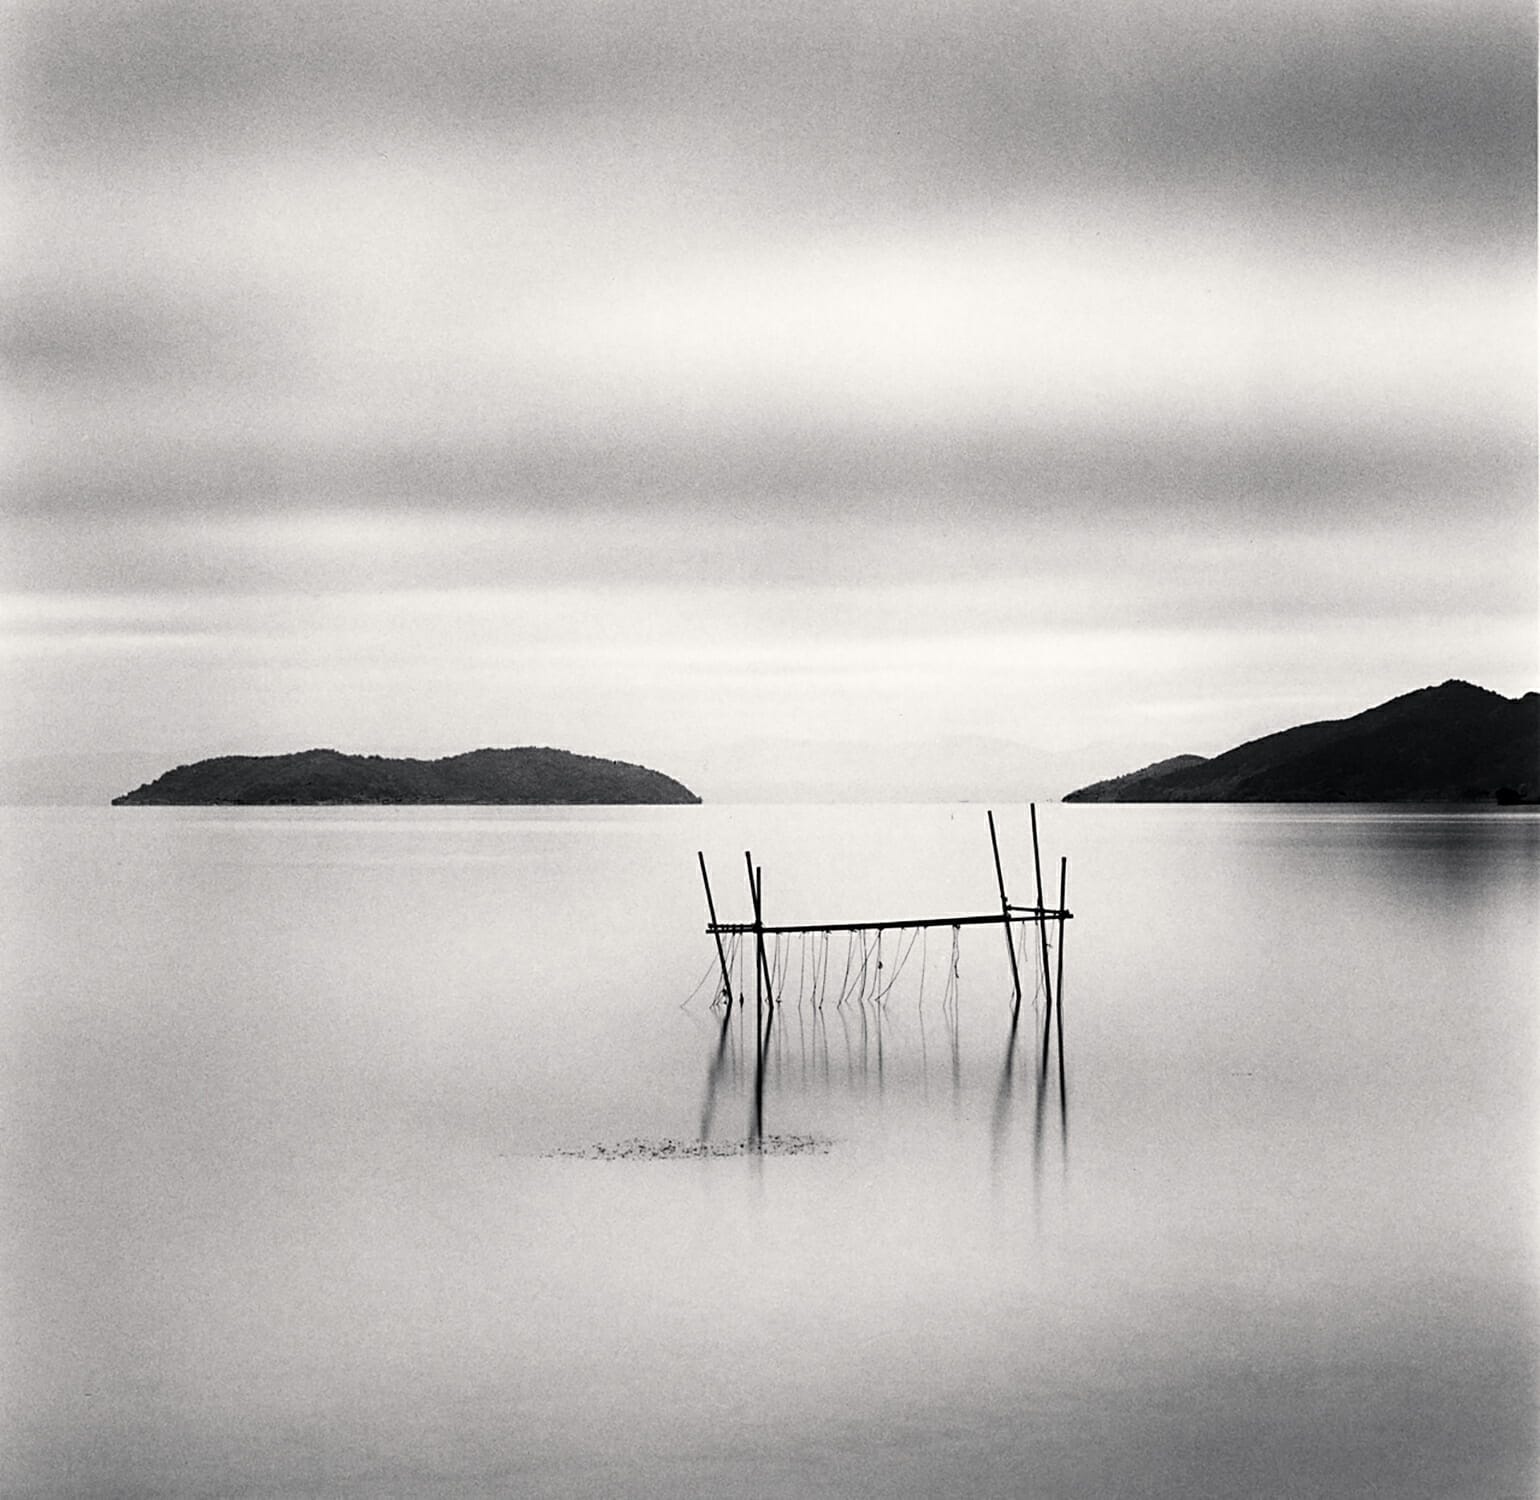 Fishnet Structure, Biwa Lake, Honshu, Japan